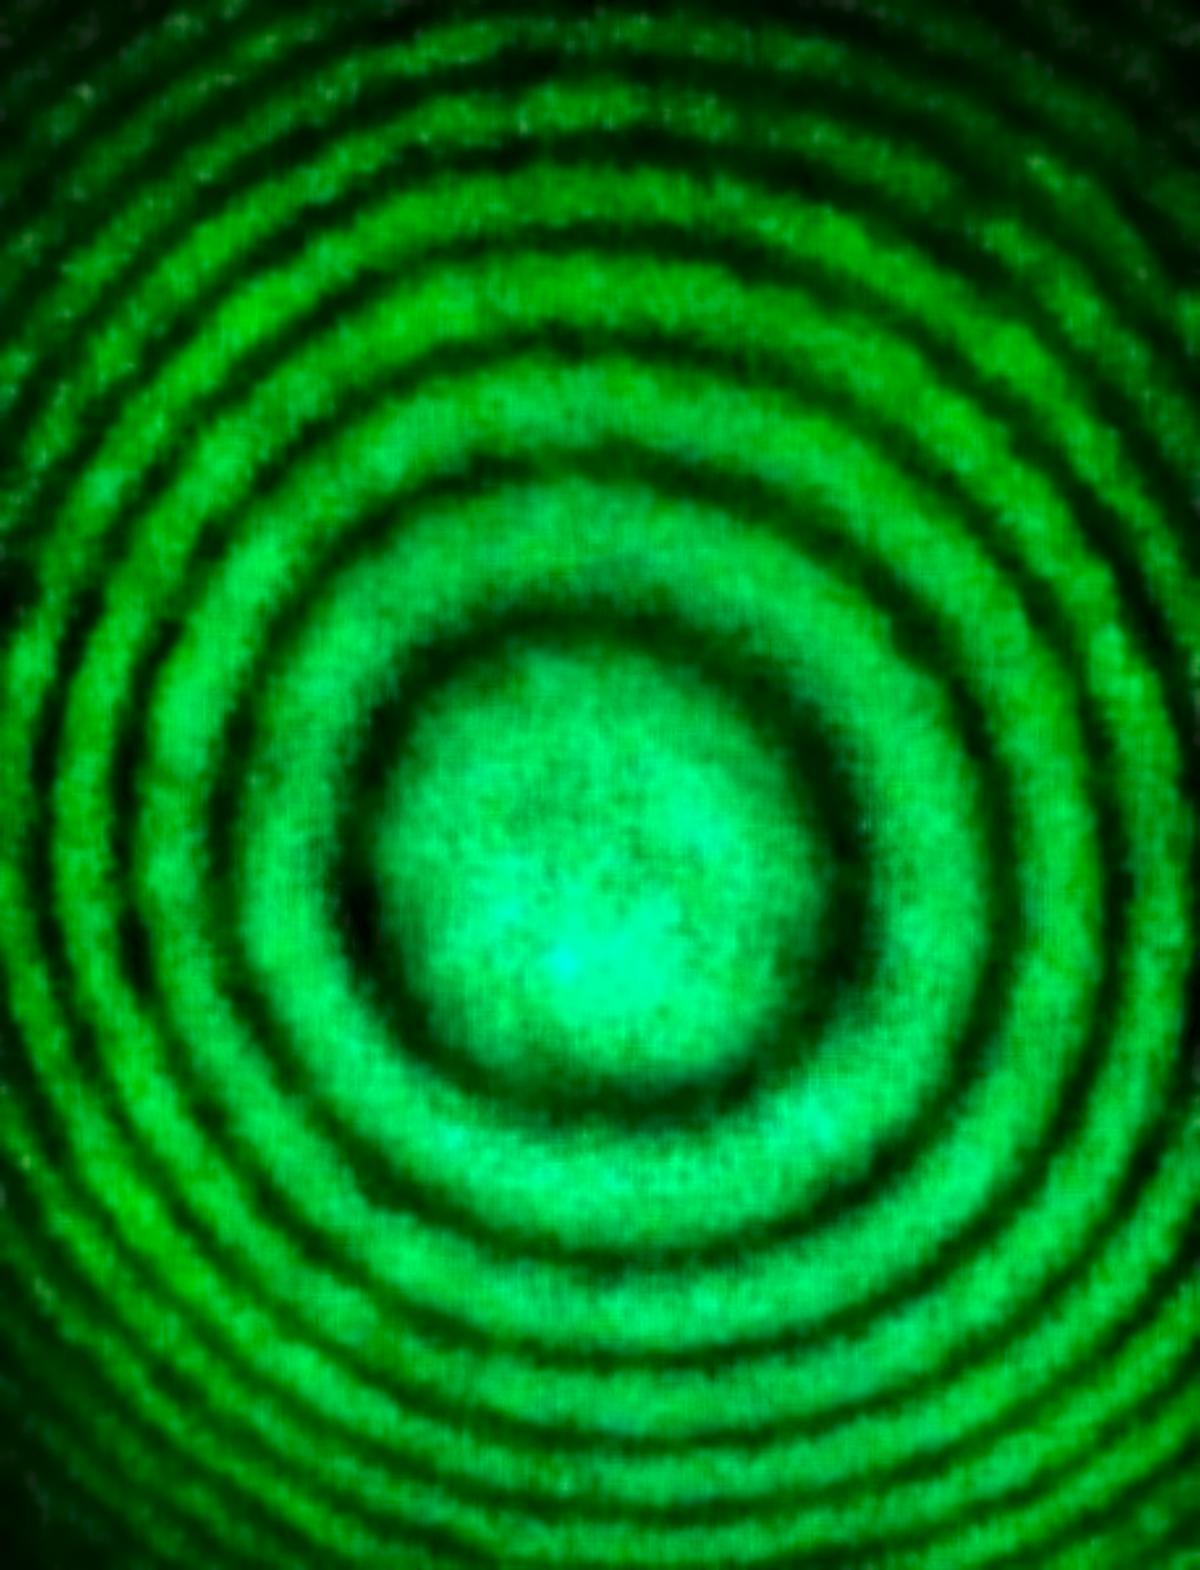 Fringes 536 nm green laser.jpg